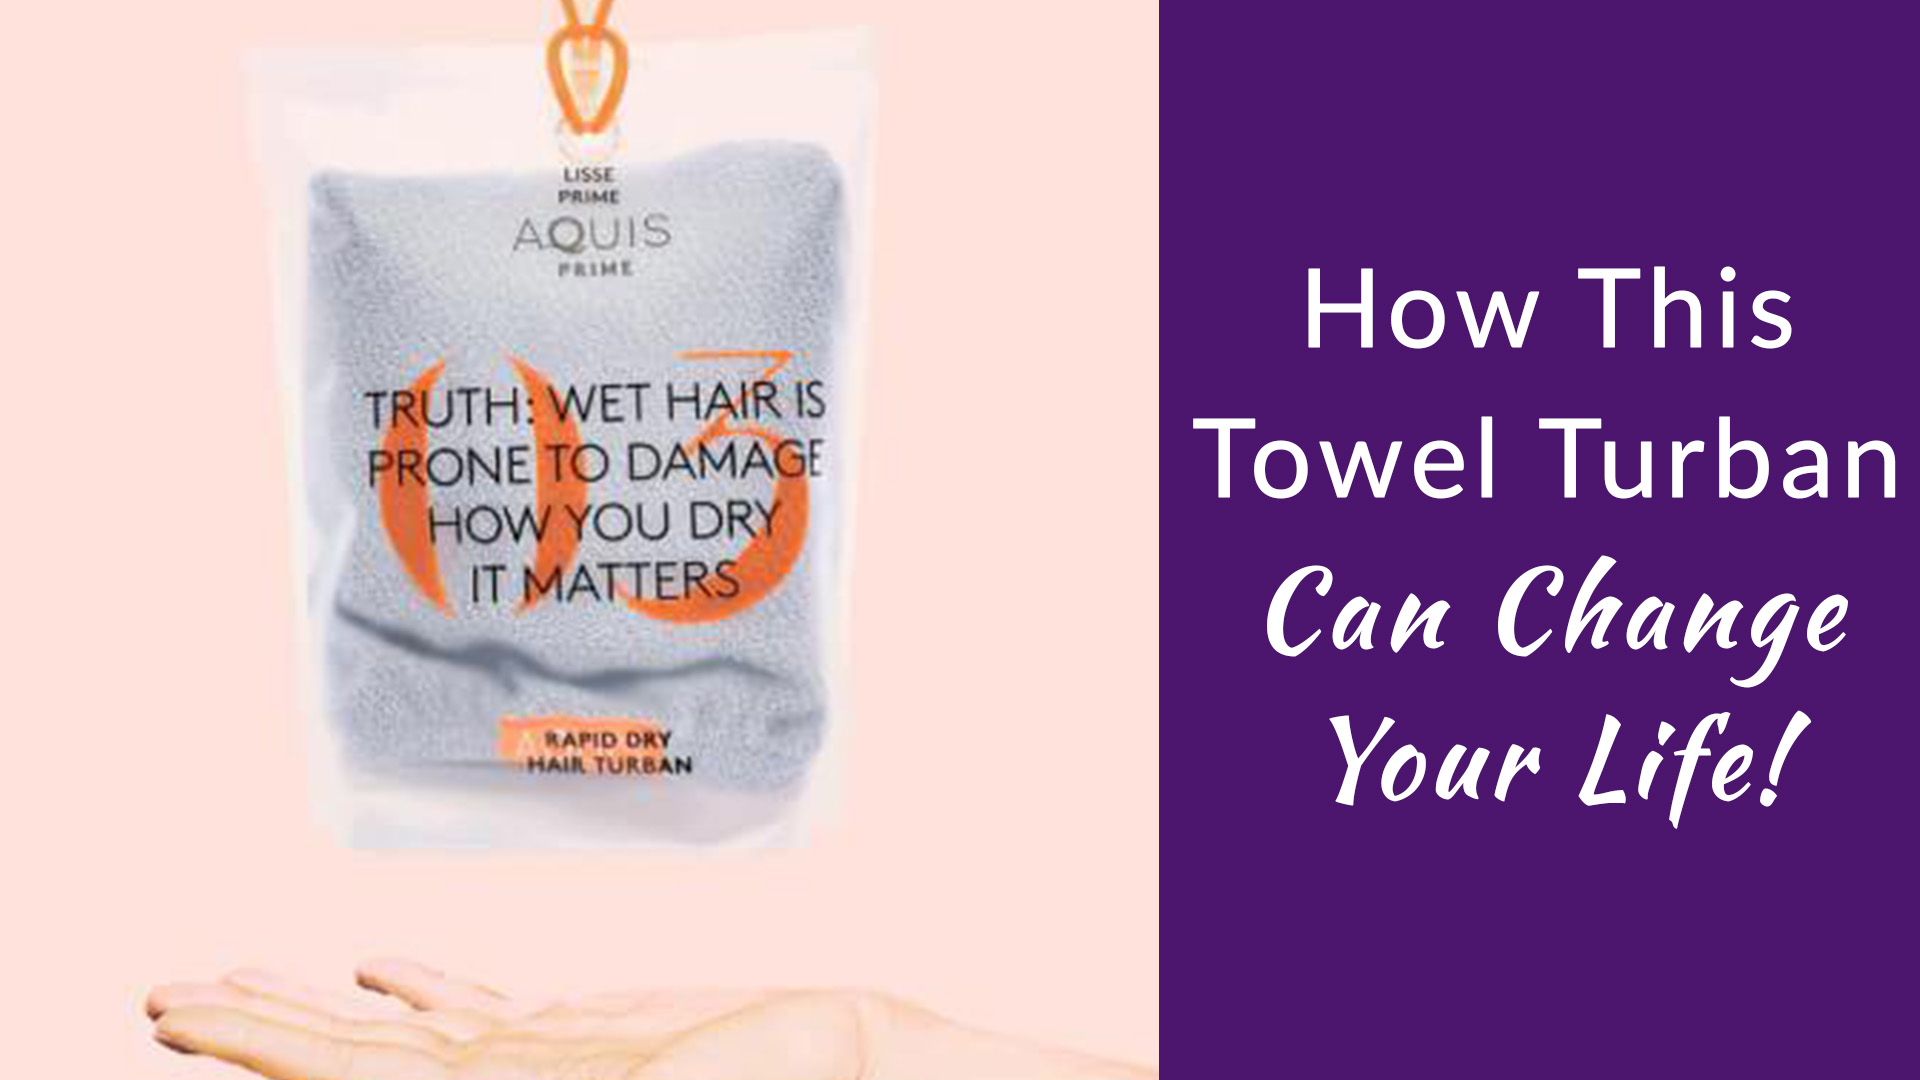 Towel Turban Blog